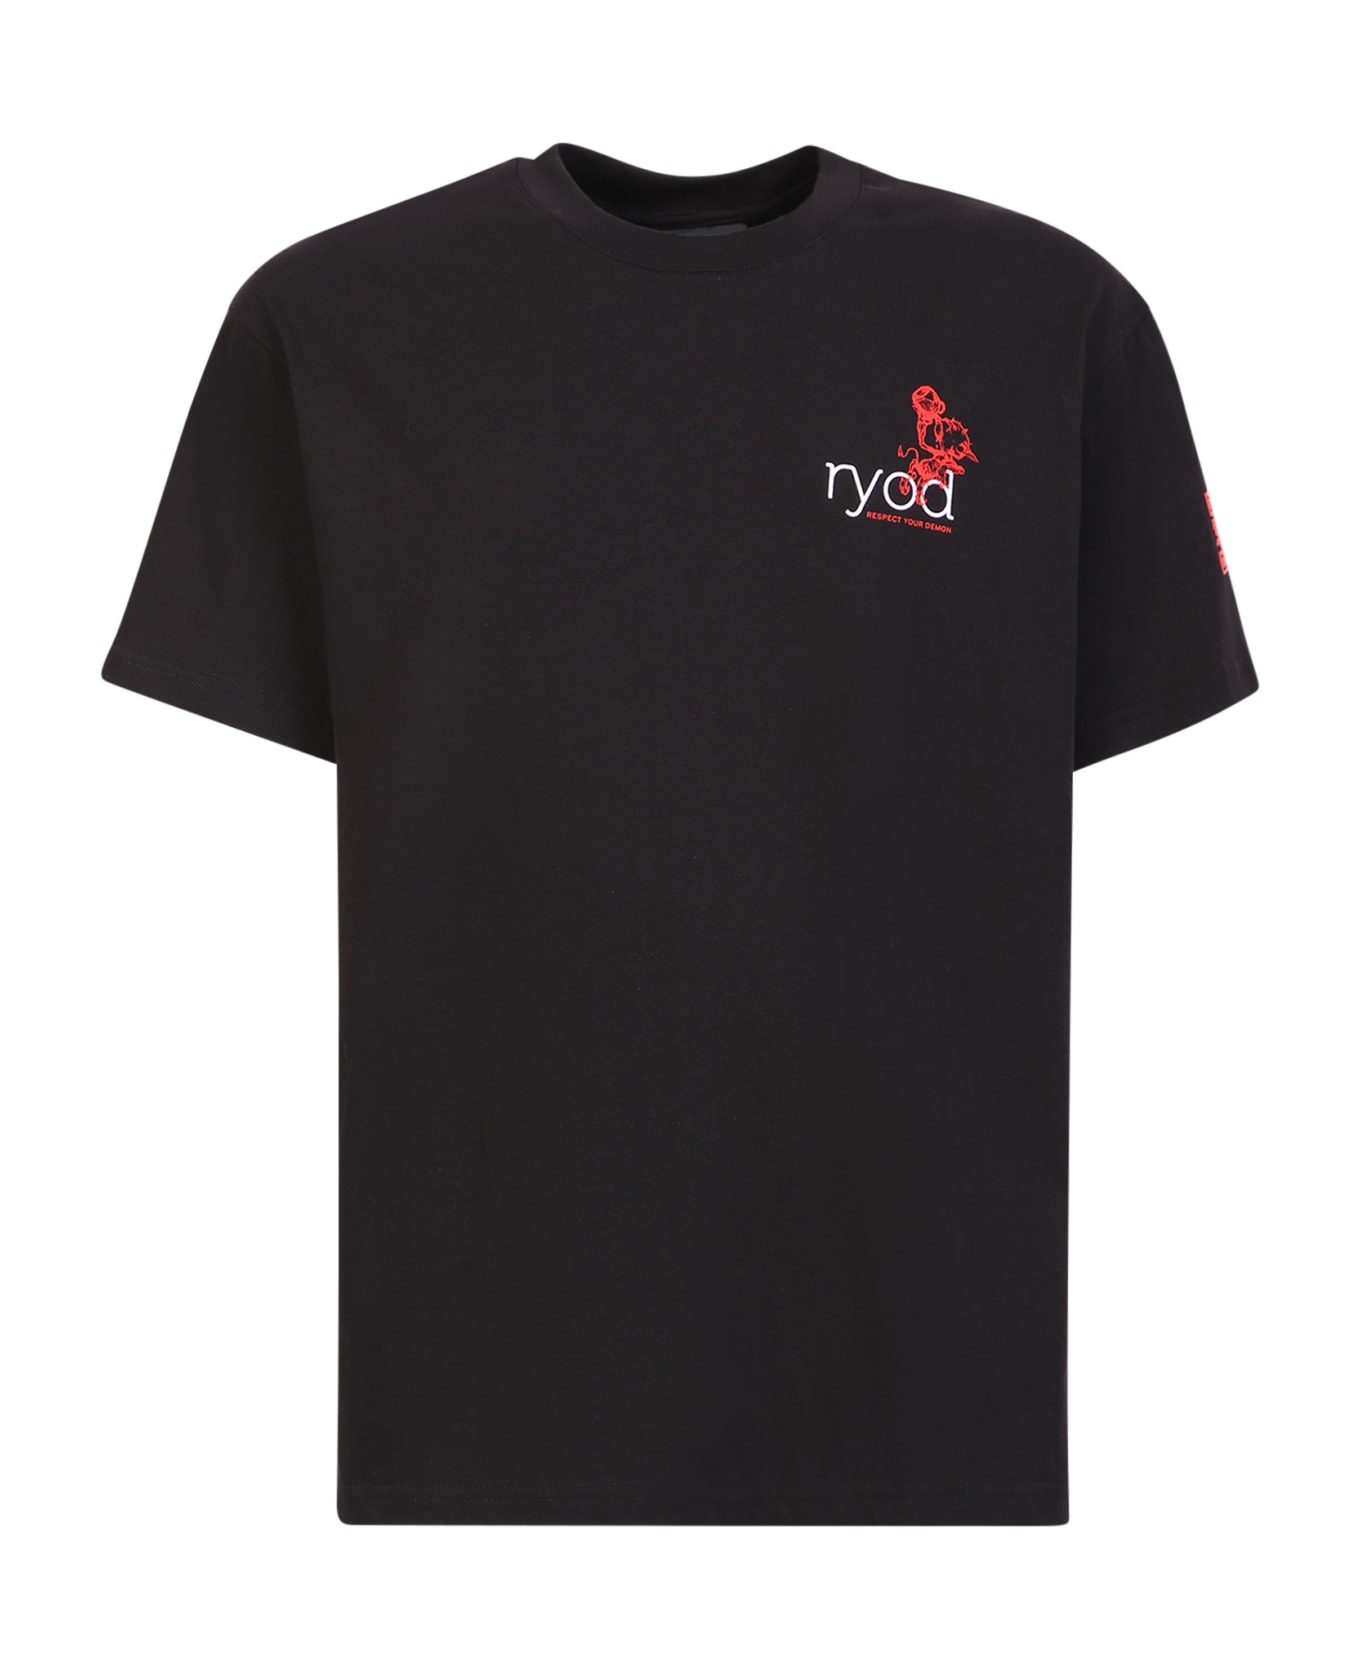 Ihs Ryod T-shirt - Black